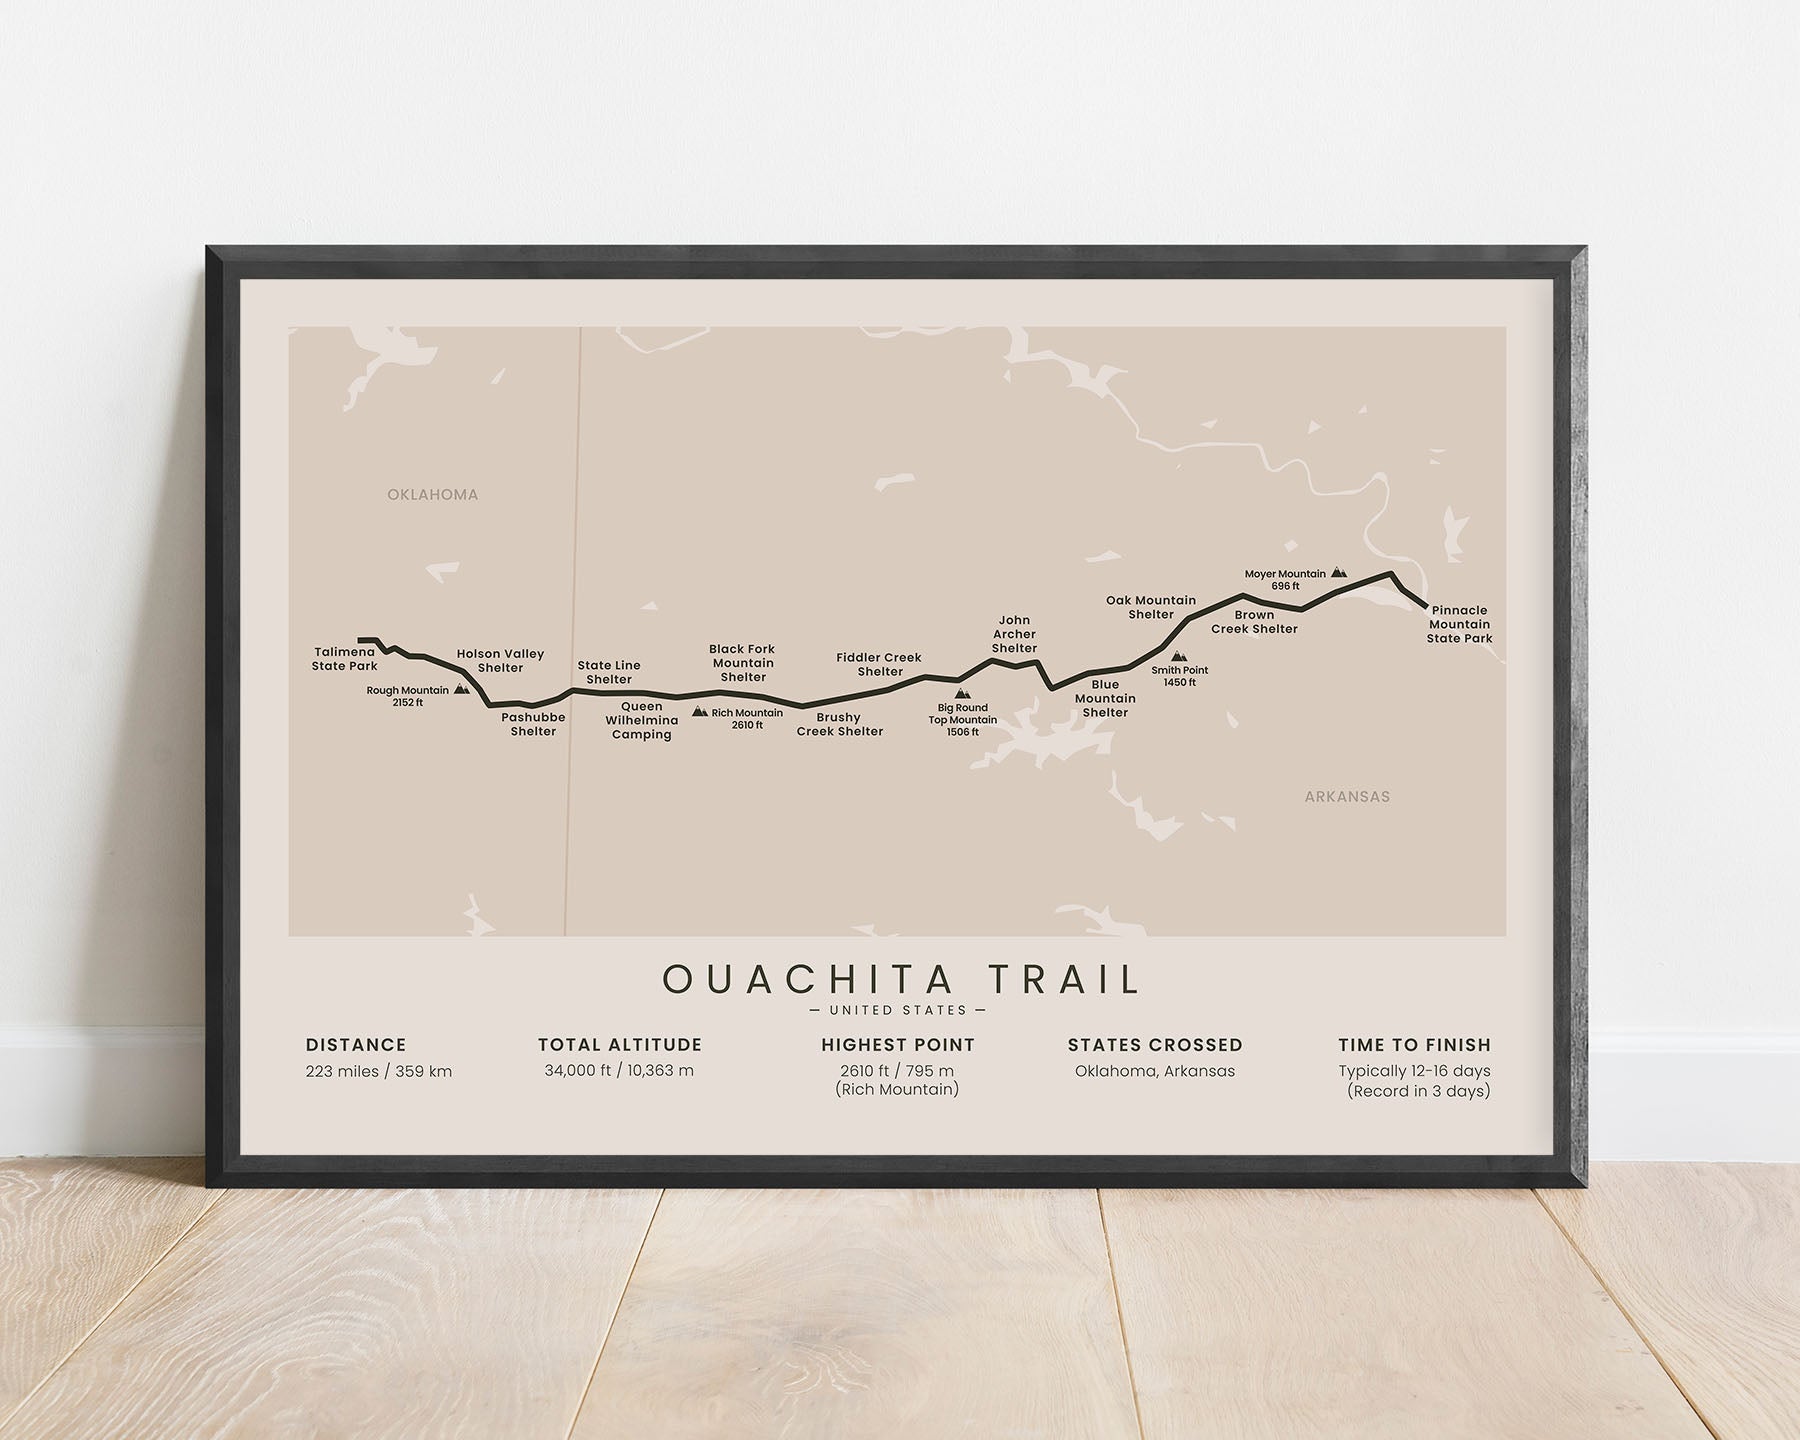 Ouachita National Recreation Trail (Pinnacle Mountain) trek wall map with beige background